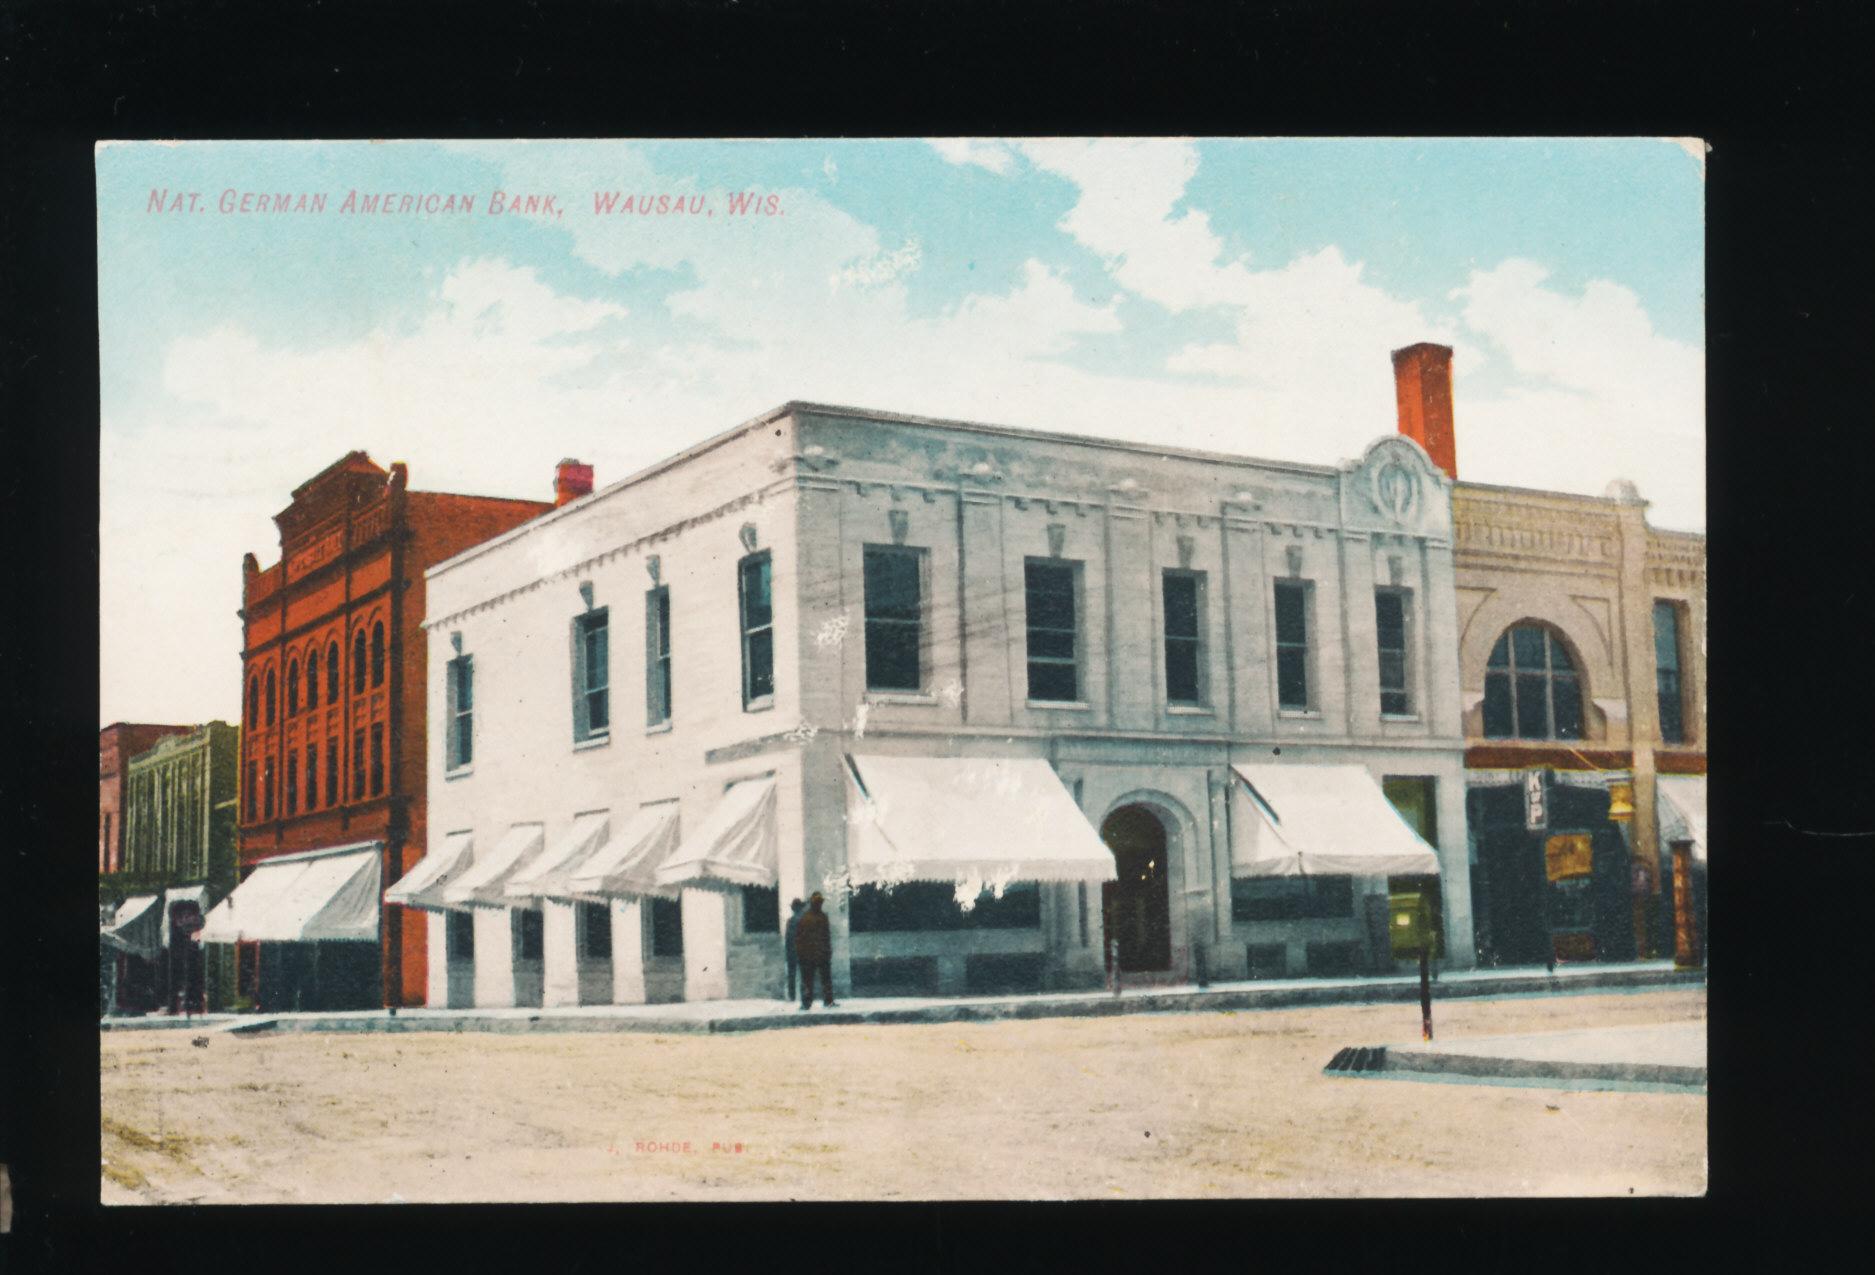 1908 View ofNat. German American Bank at Wausau, Wisconsin.  SIZE:  Standar